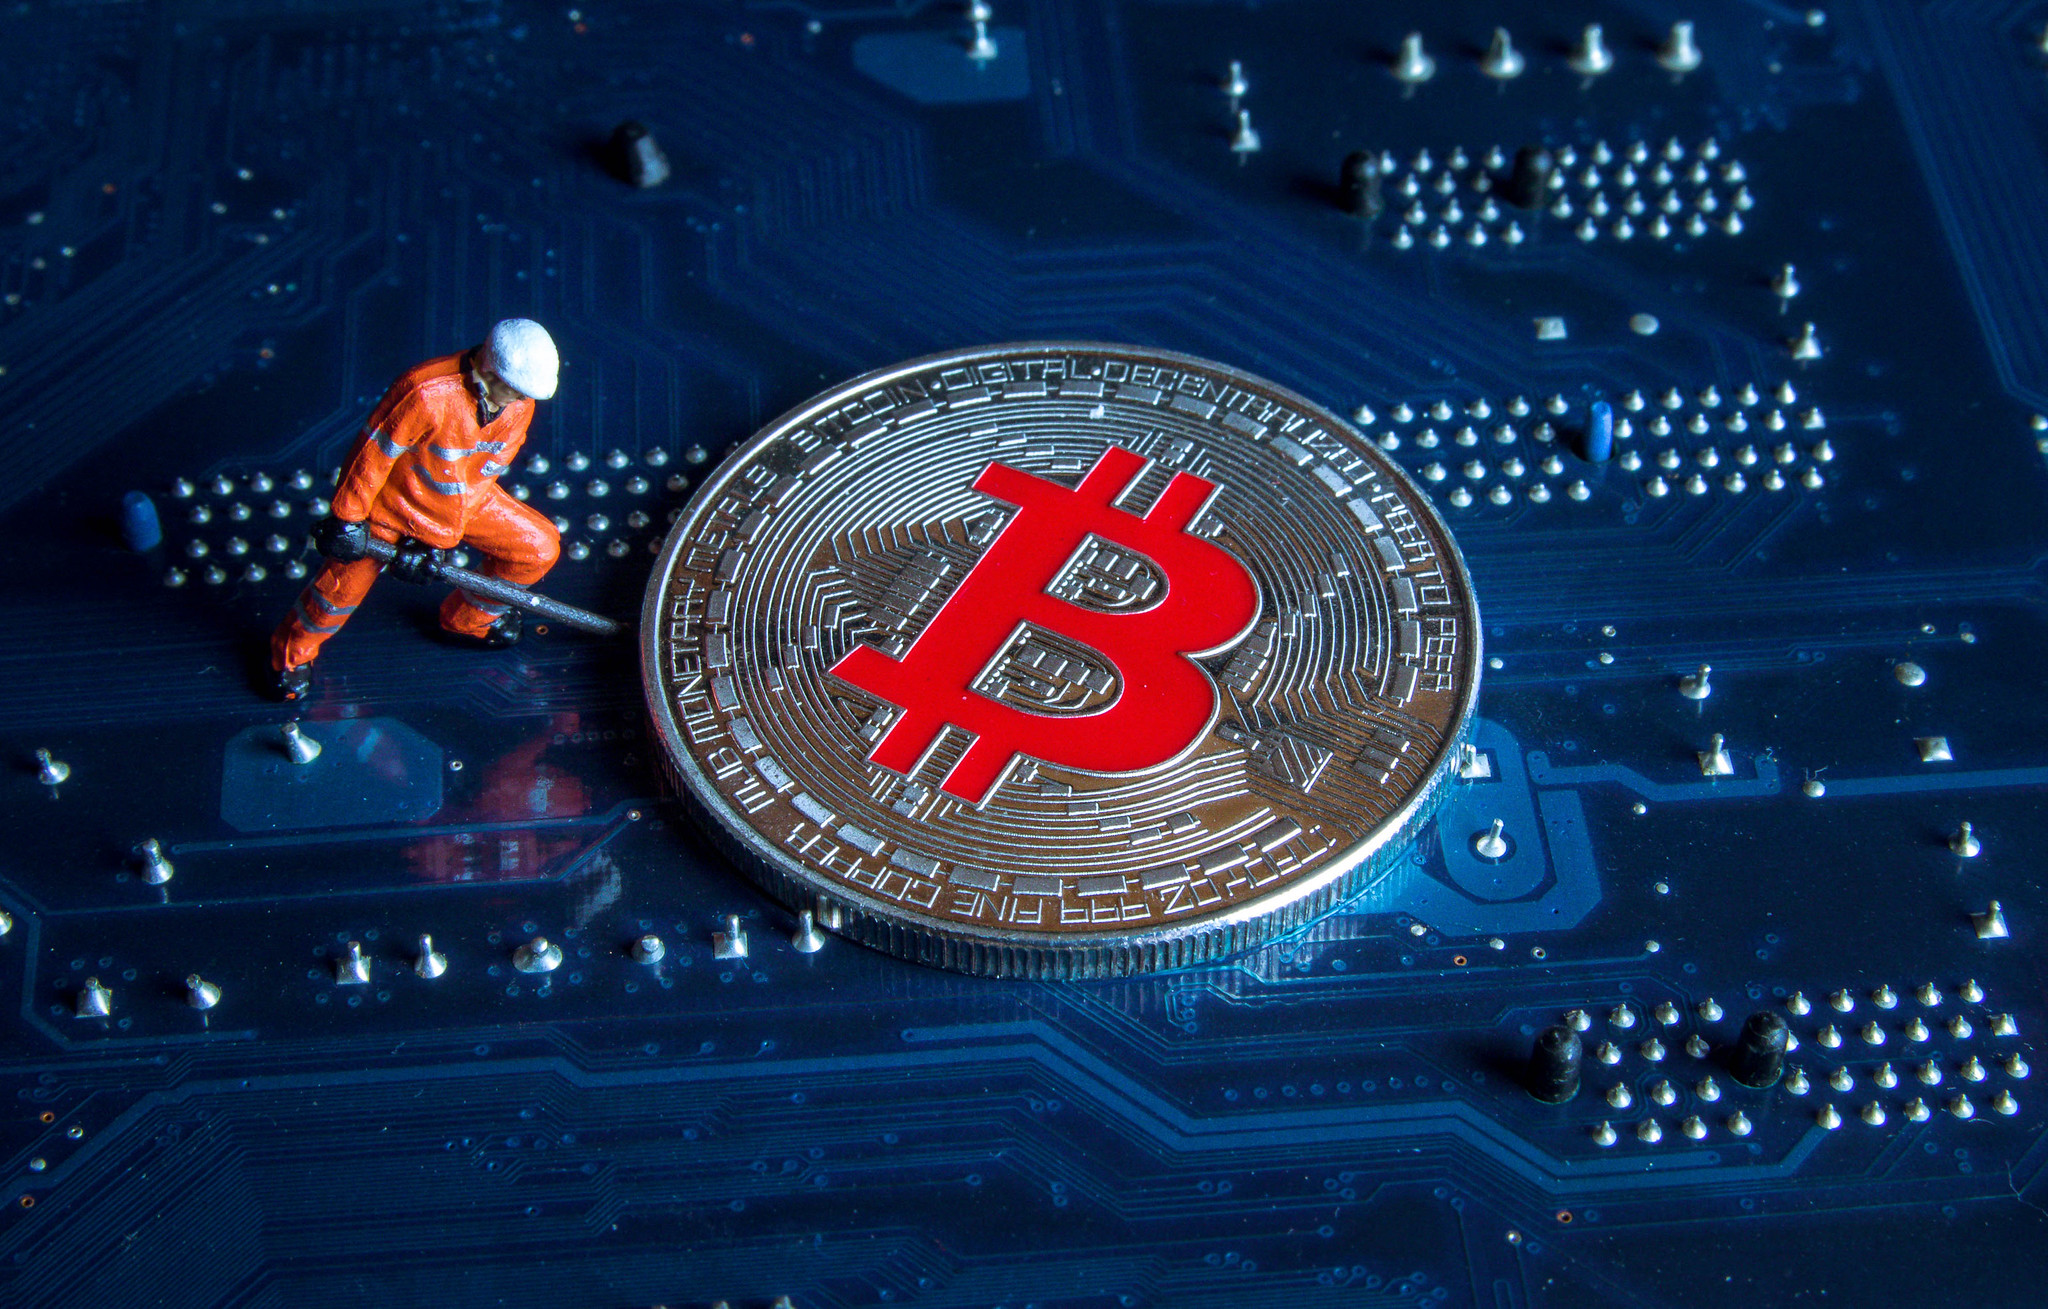 Bitcoin Miner Core Scientific’s Stock Price Rose By 240%